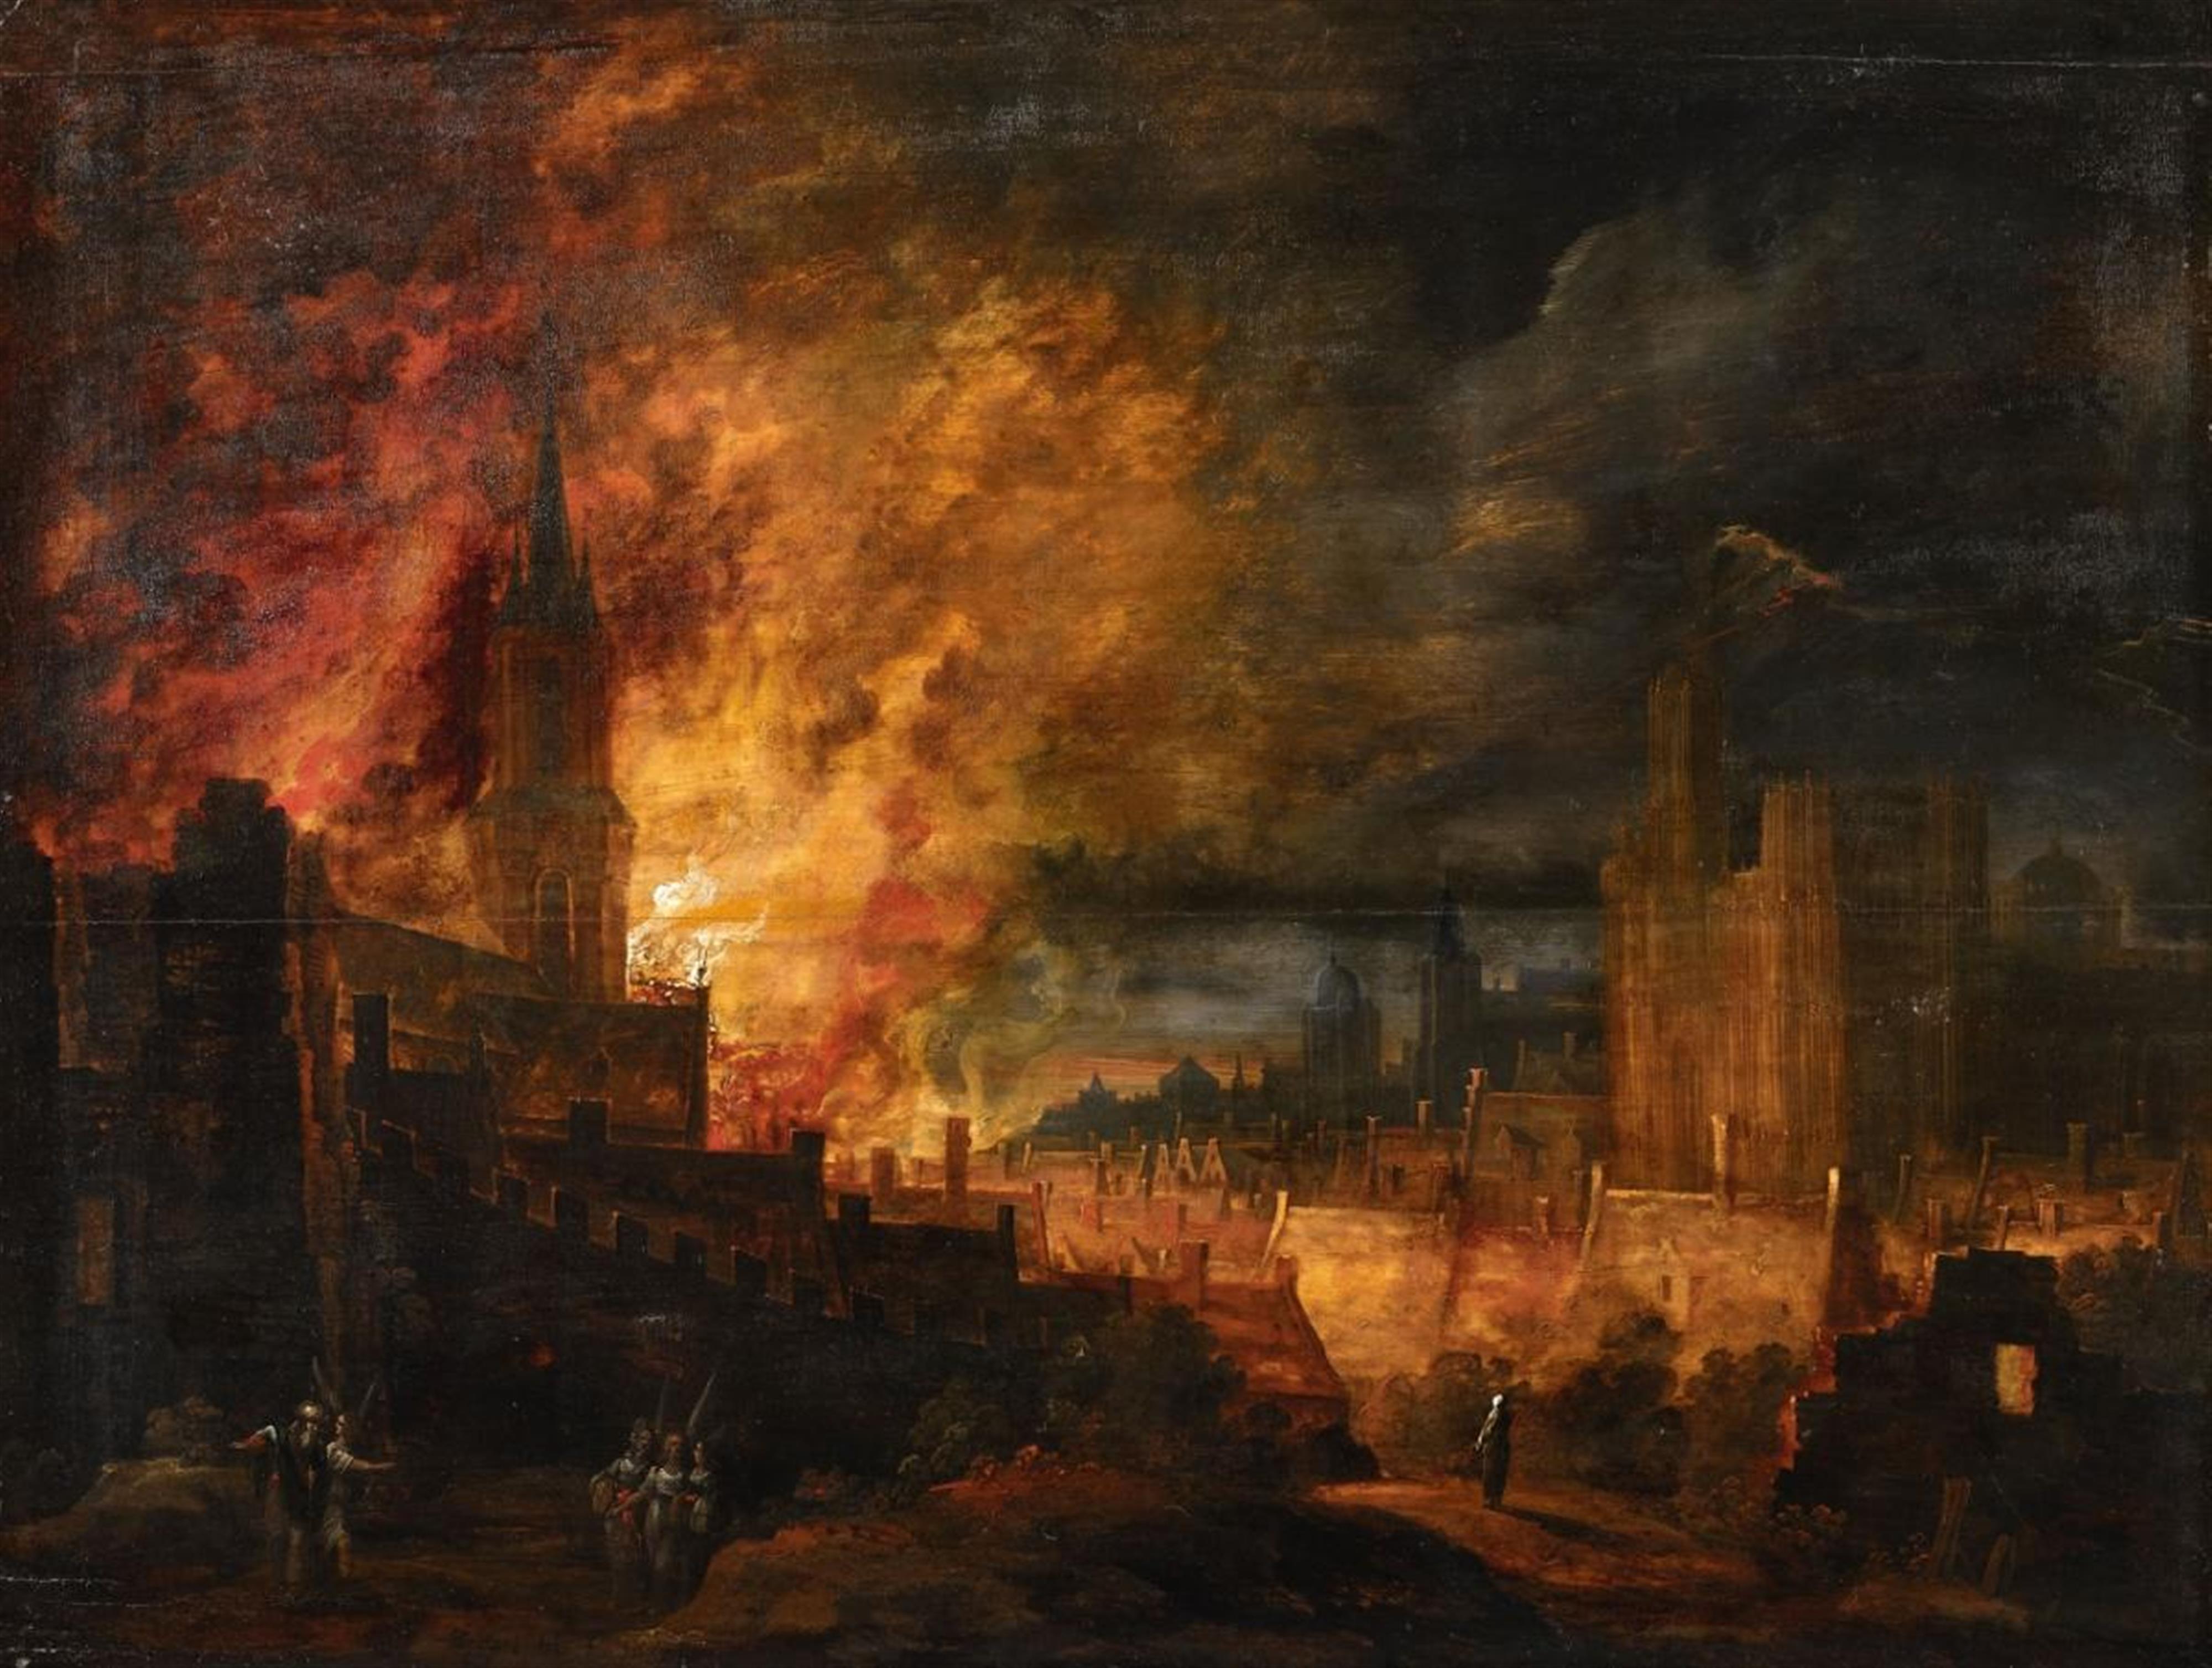 Pieter Segart - The Destruction of Sodom and Gomorrah